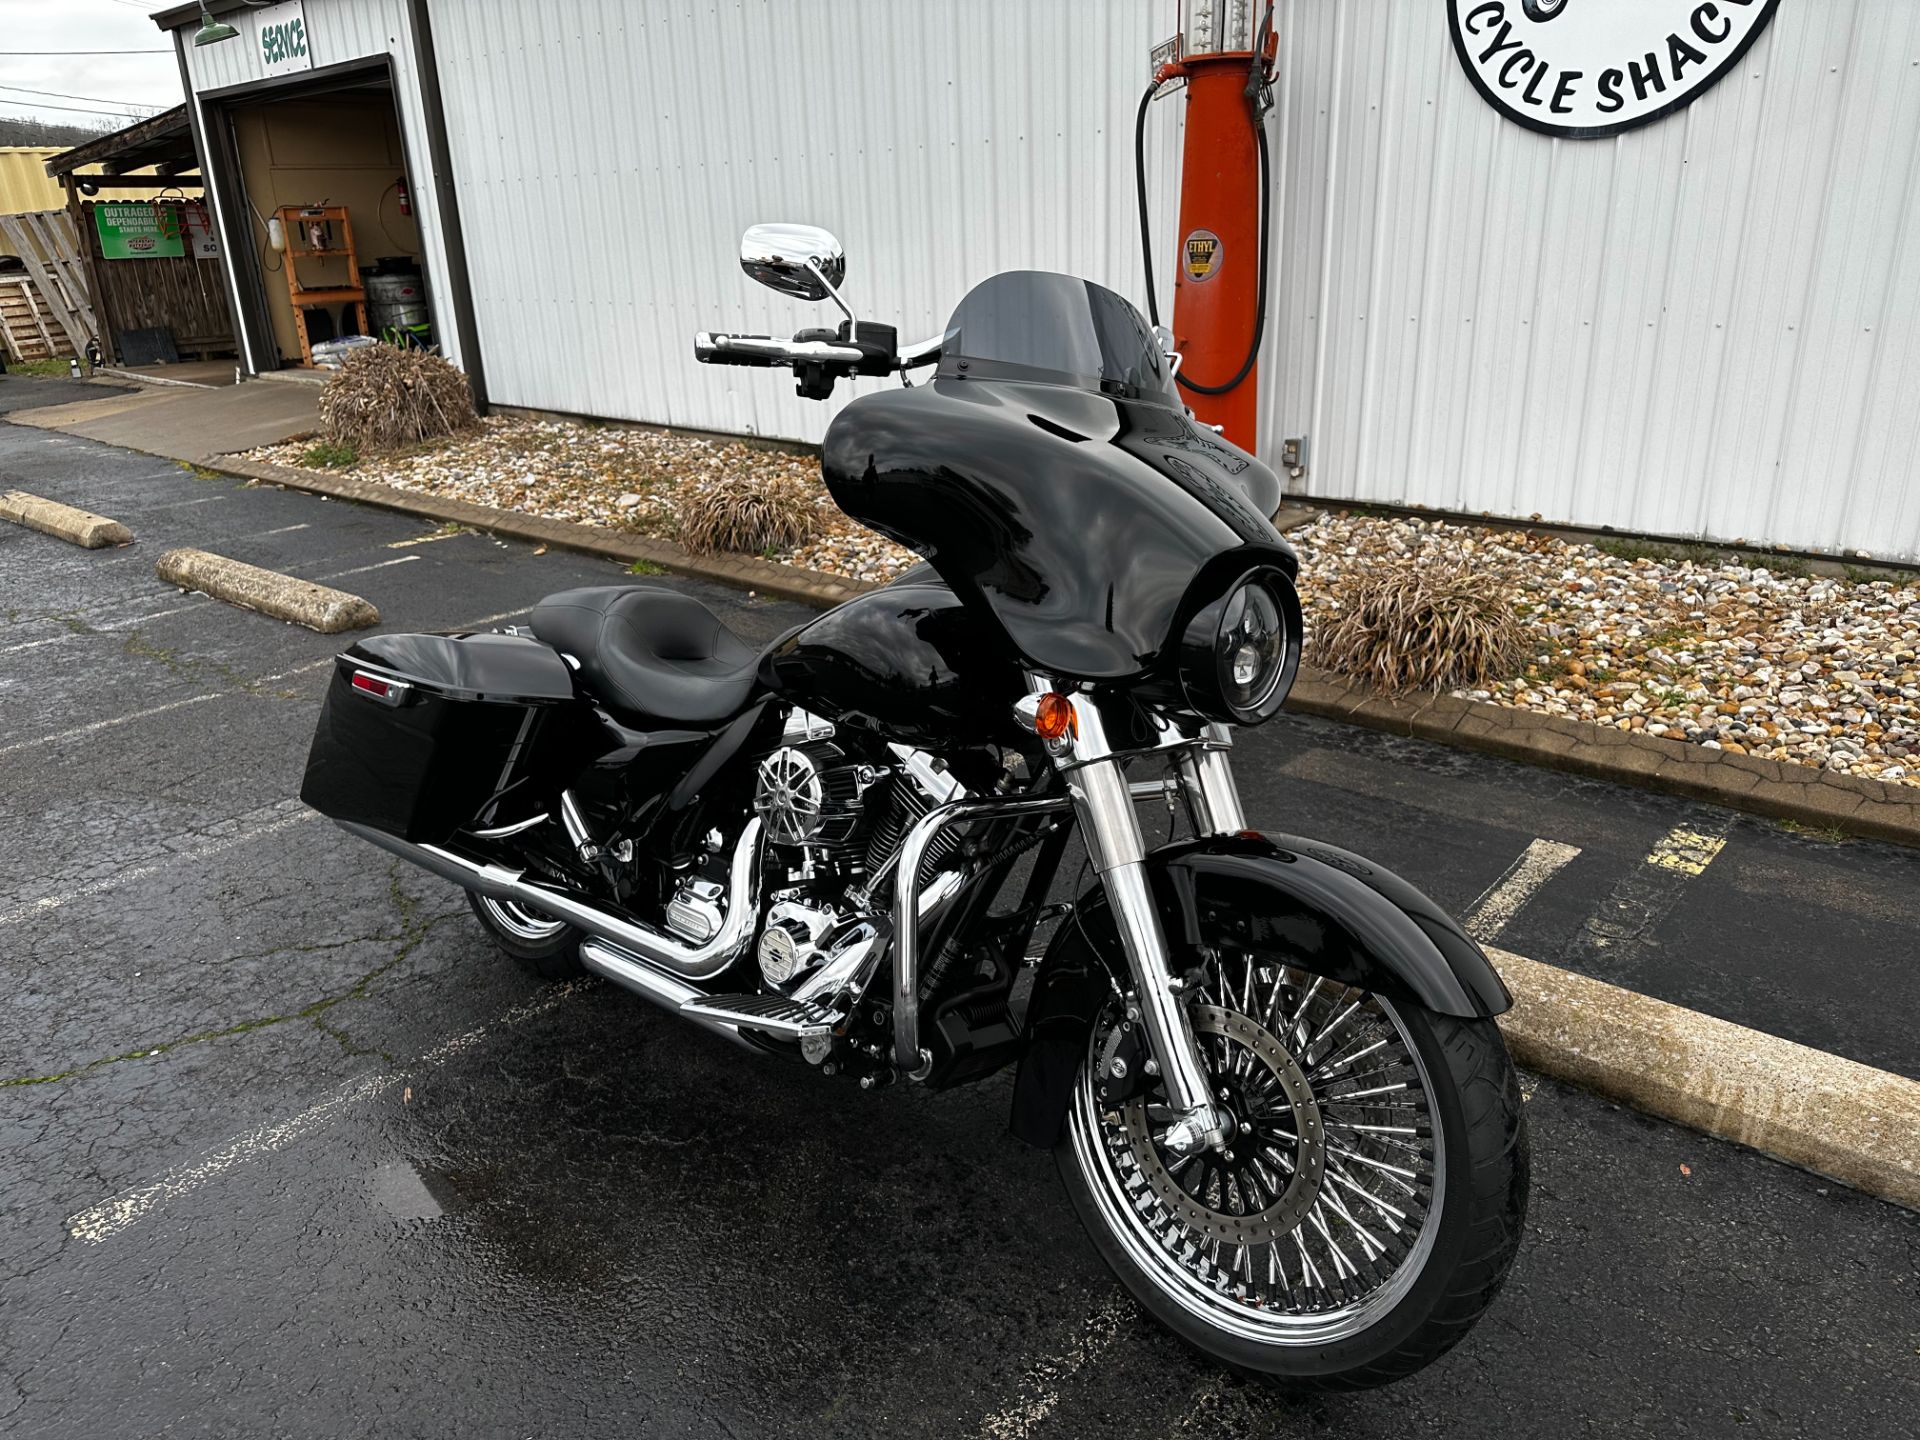 2013 Harley-Davidson Street Glide® in Greenbrier, Arkansas - Photo 5